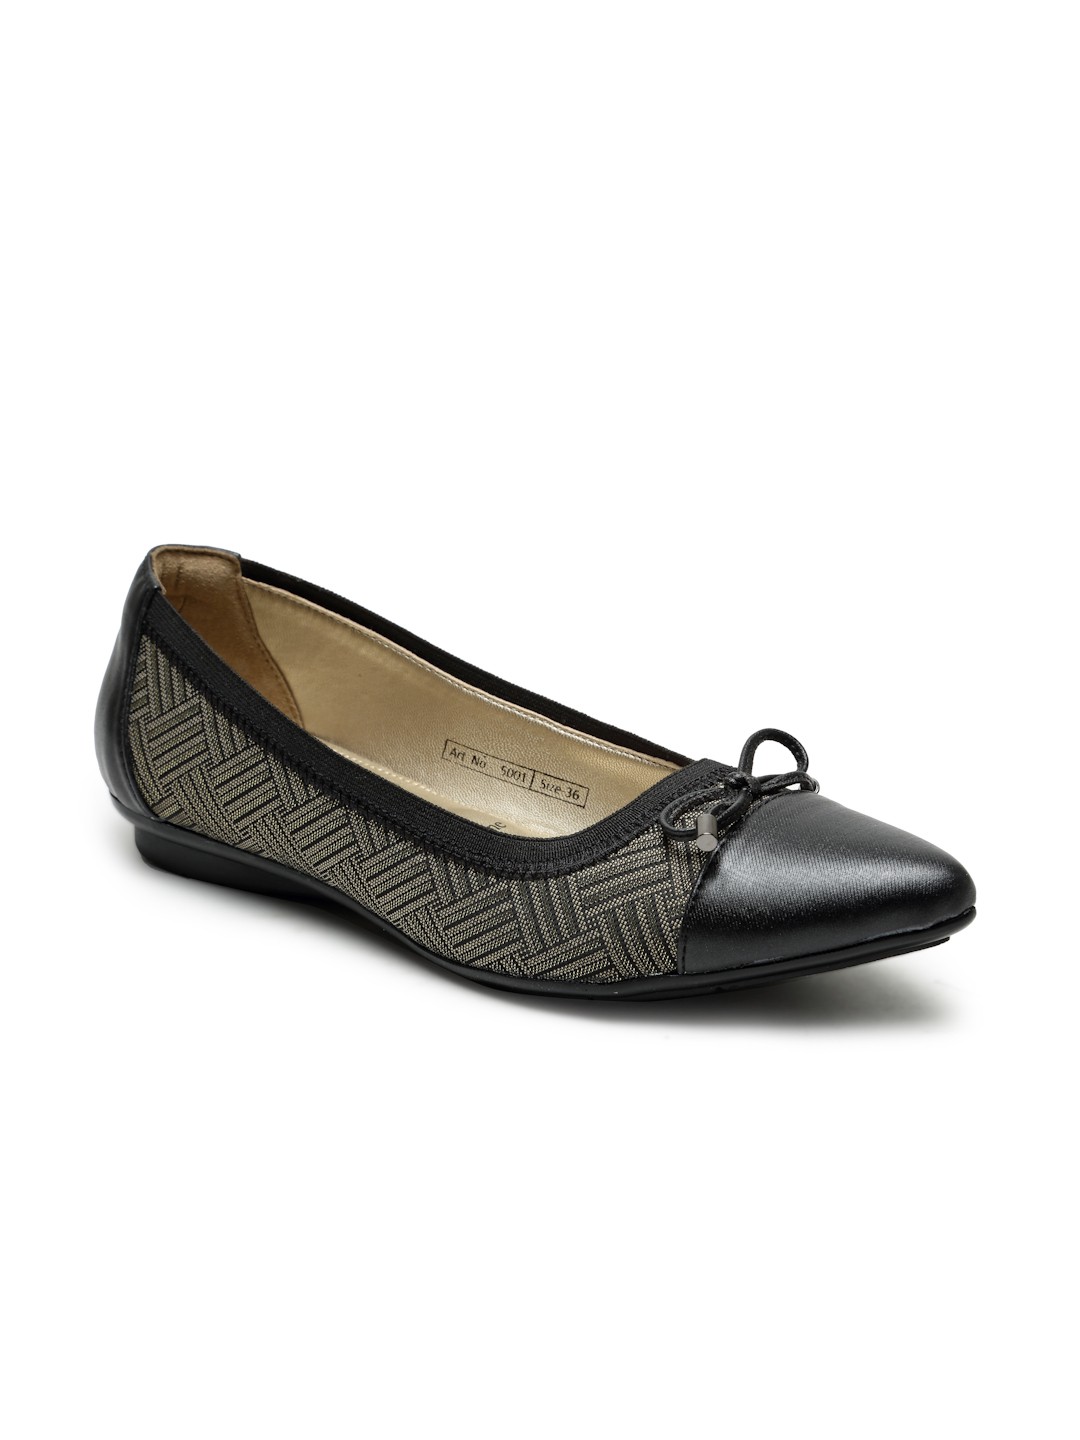 Buy Von Wellx Germany Comfort Women's Black Casual Shoes Lisa Online in Abu Dhabi